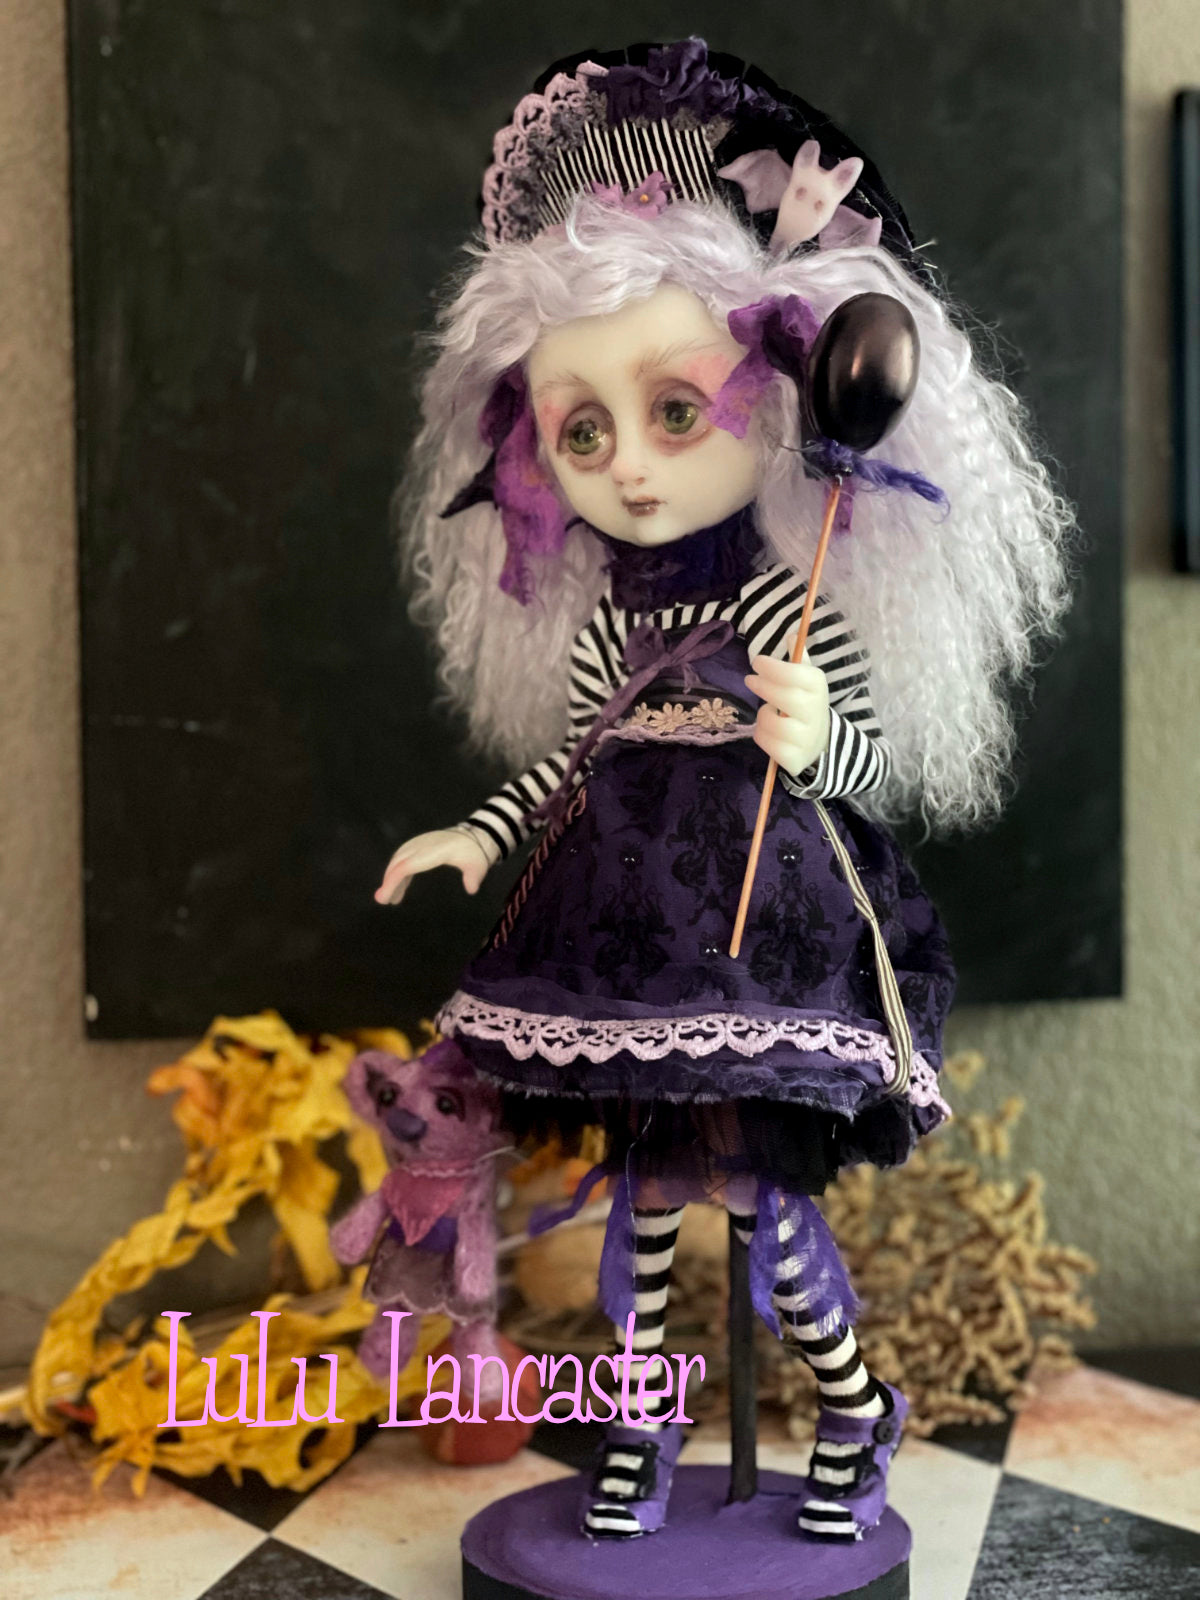 Lorellen Creepy Kid Original LuLu Lancaster Halloween Art Dolls